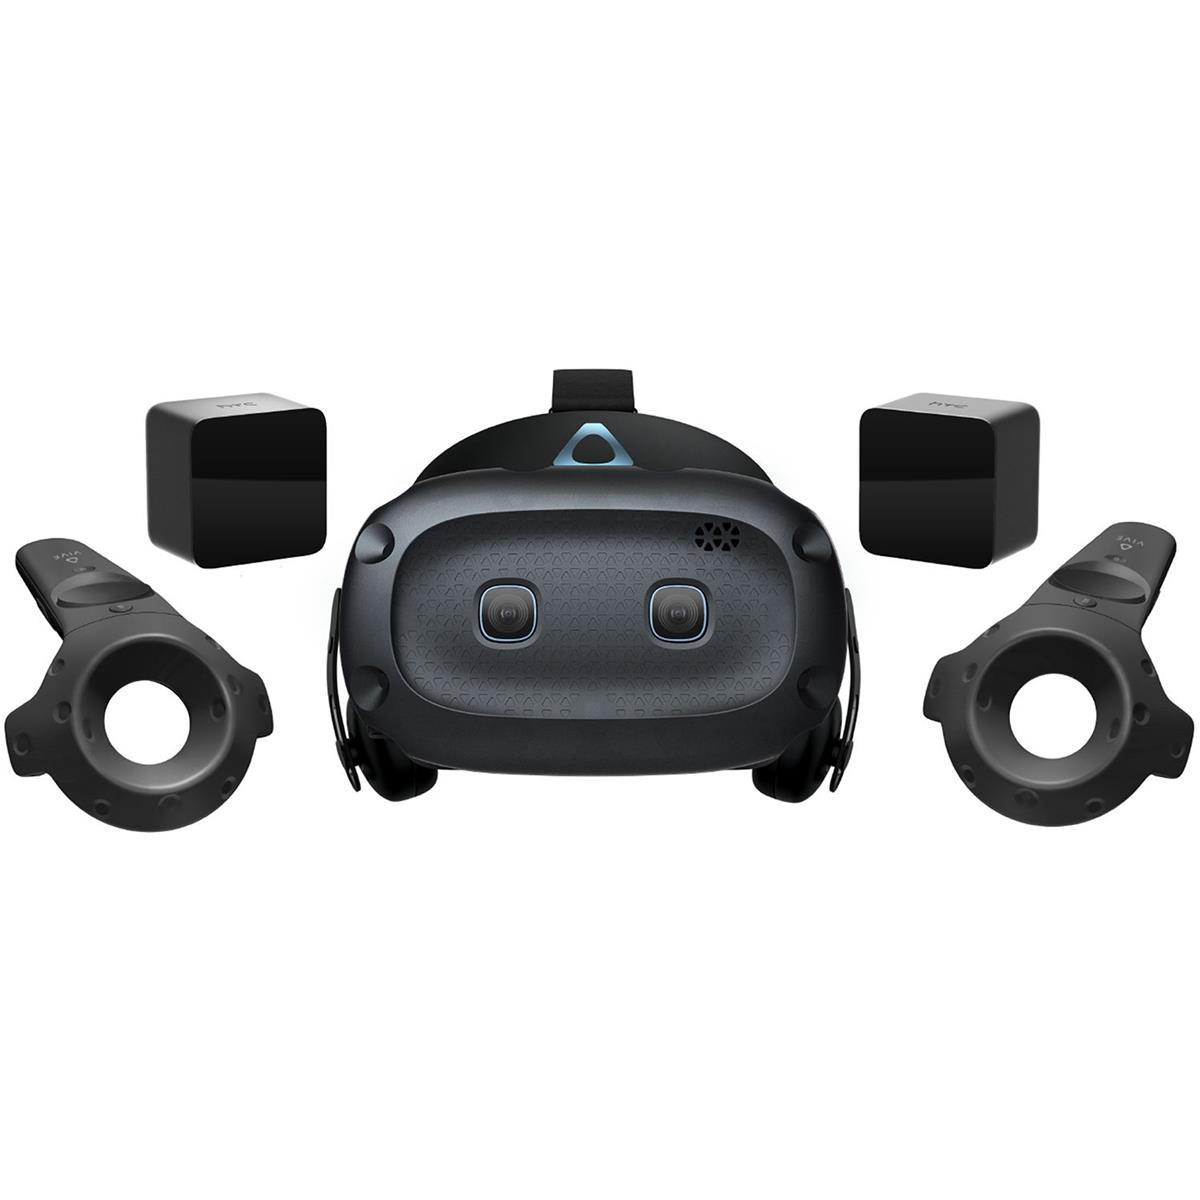 Image of HTC VIVE Cosmos Elite VR Headset